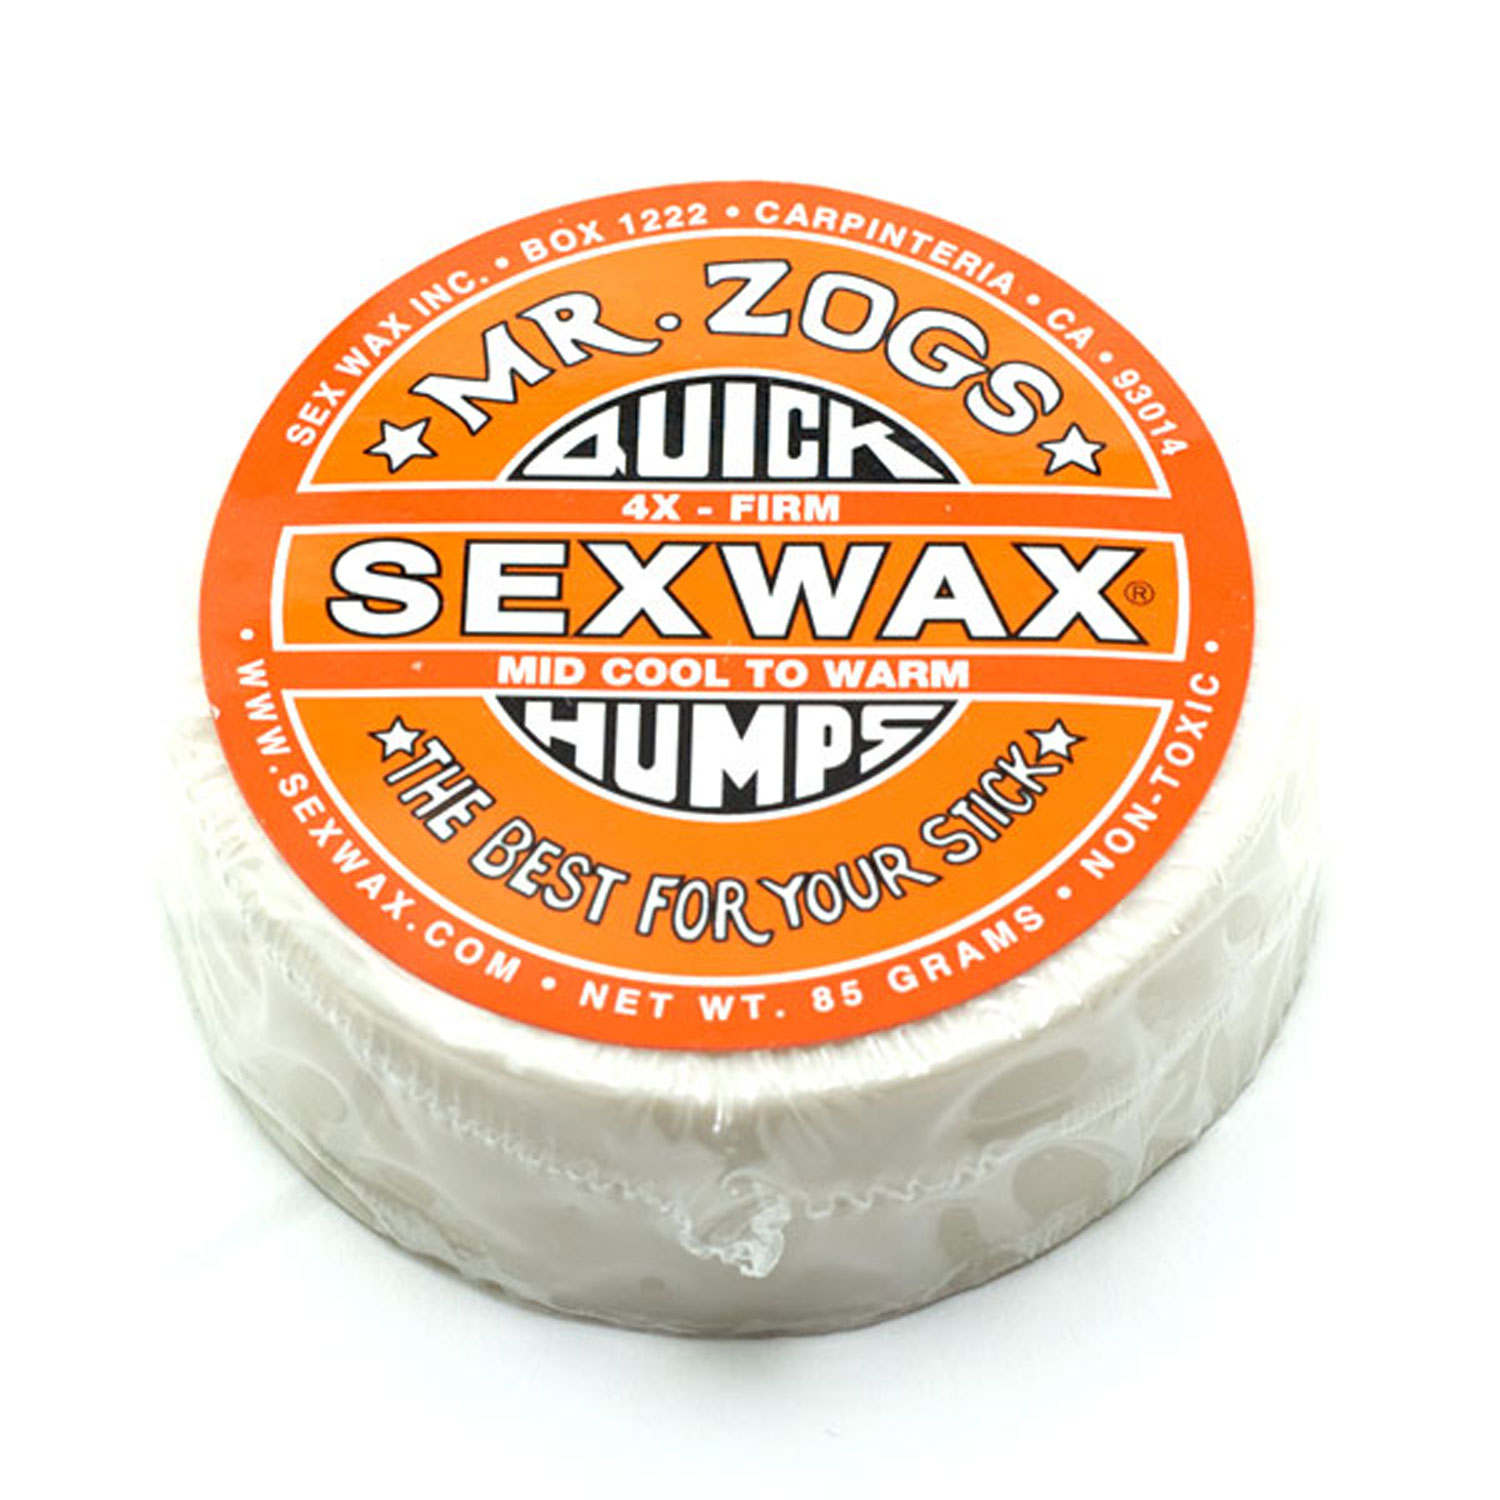 Sex Wax QUICK HUMPS 4X SURF WAX Pack of 2 Mr. Zogs.